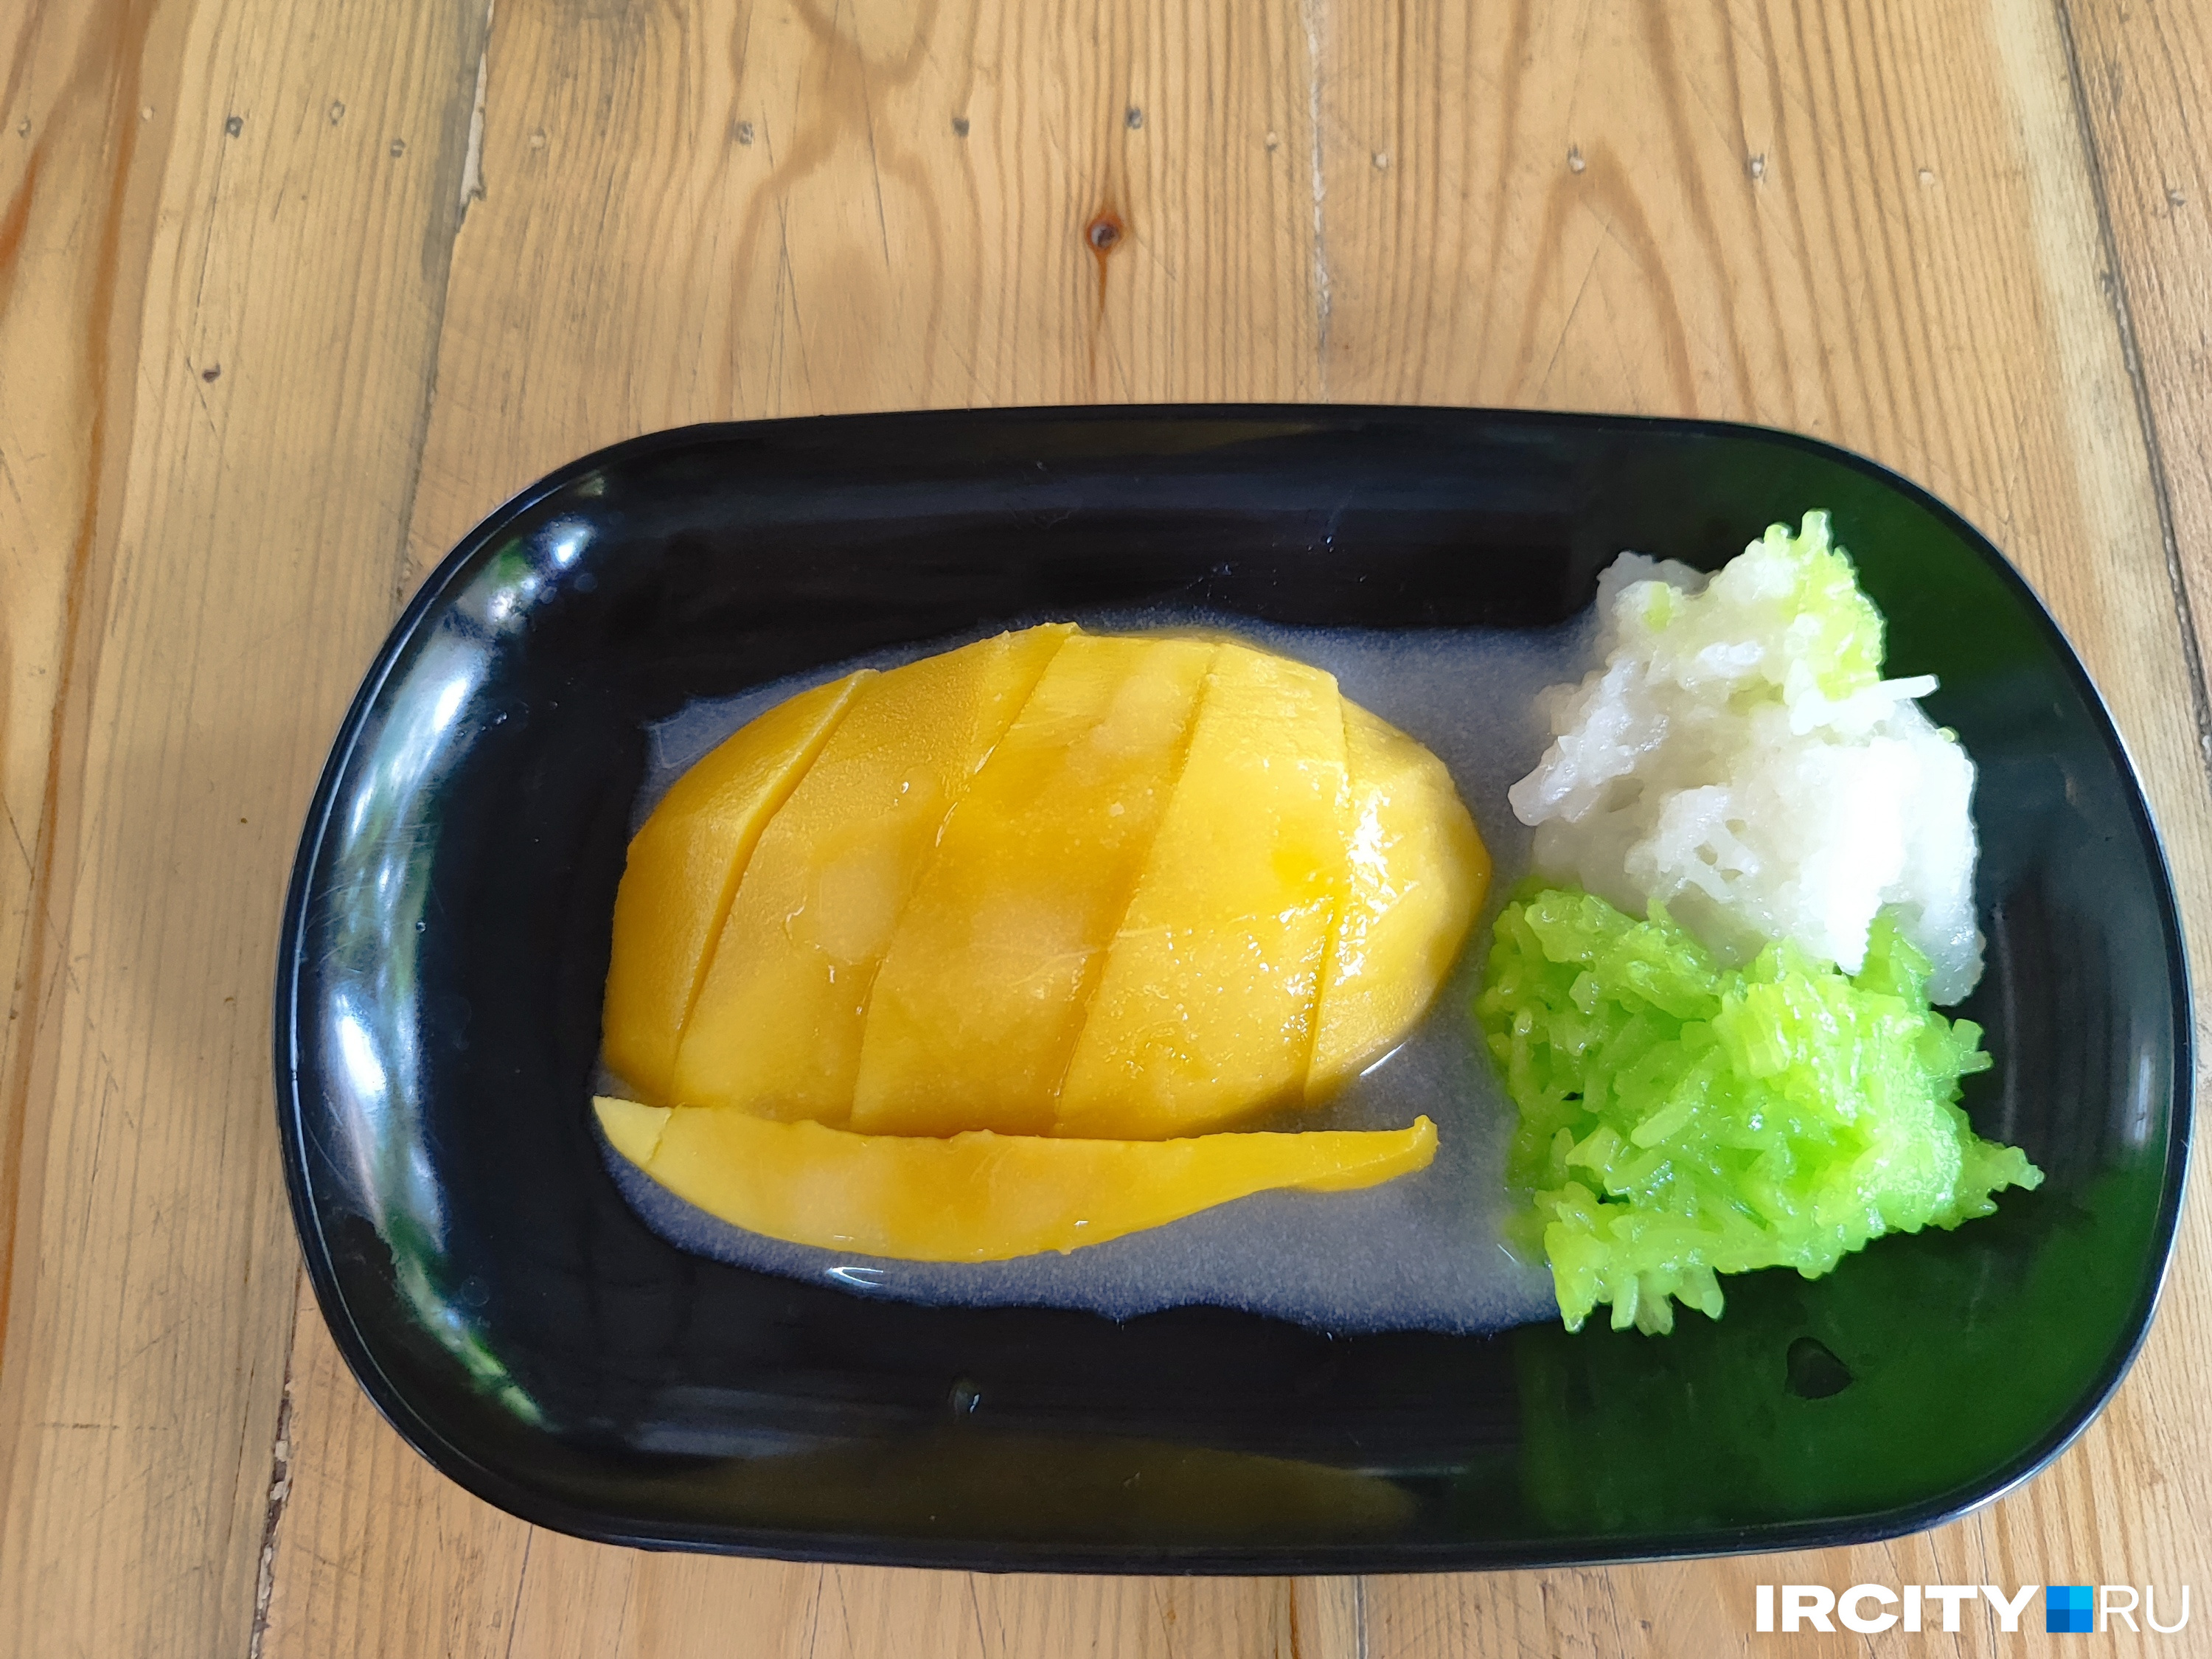 Тайский десерт Mango sticky rice